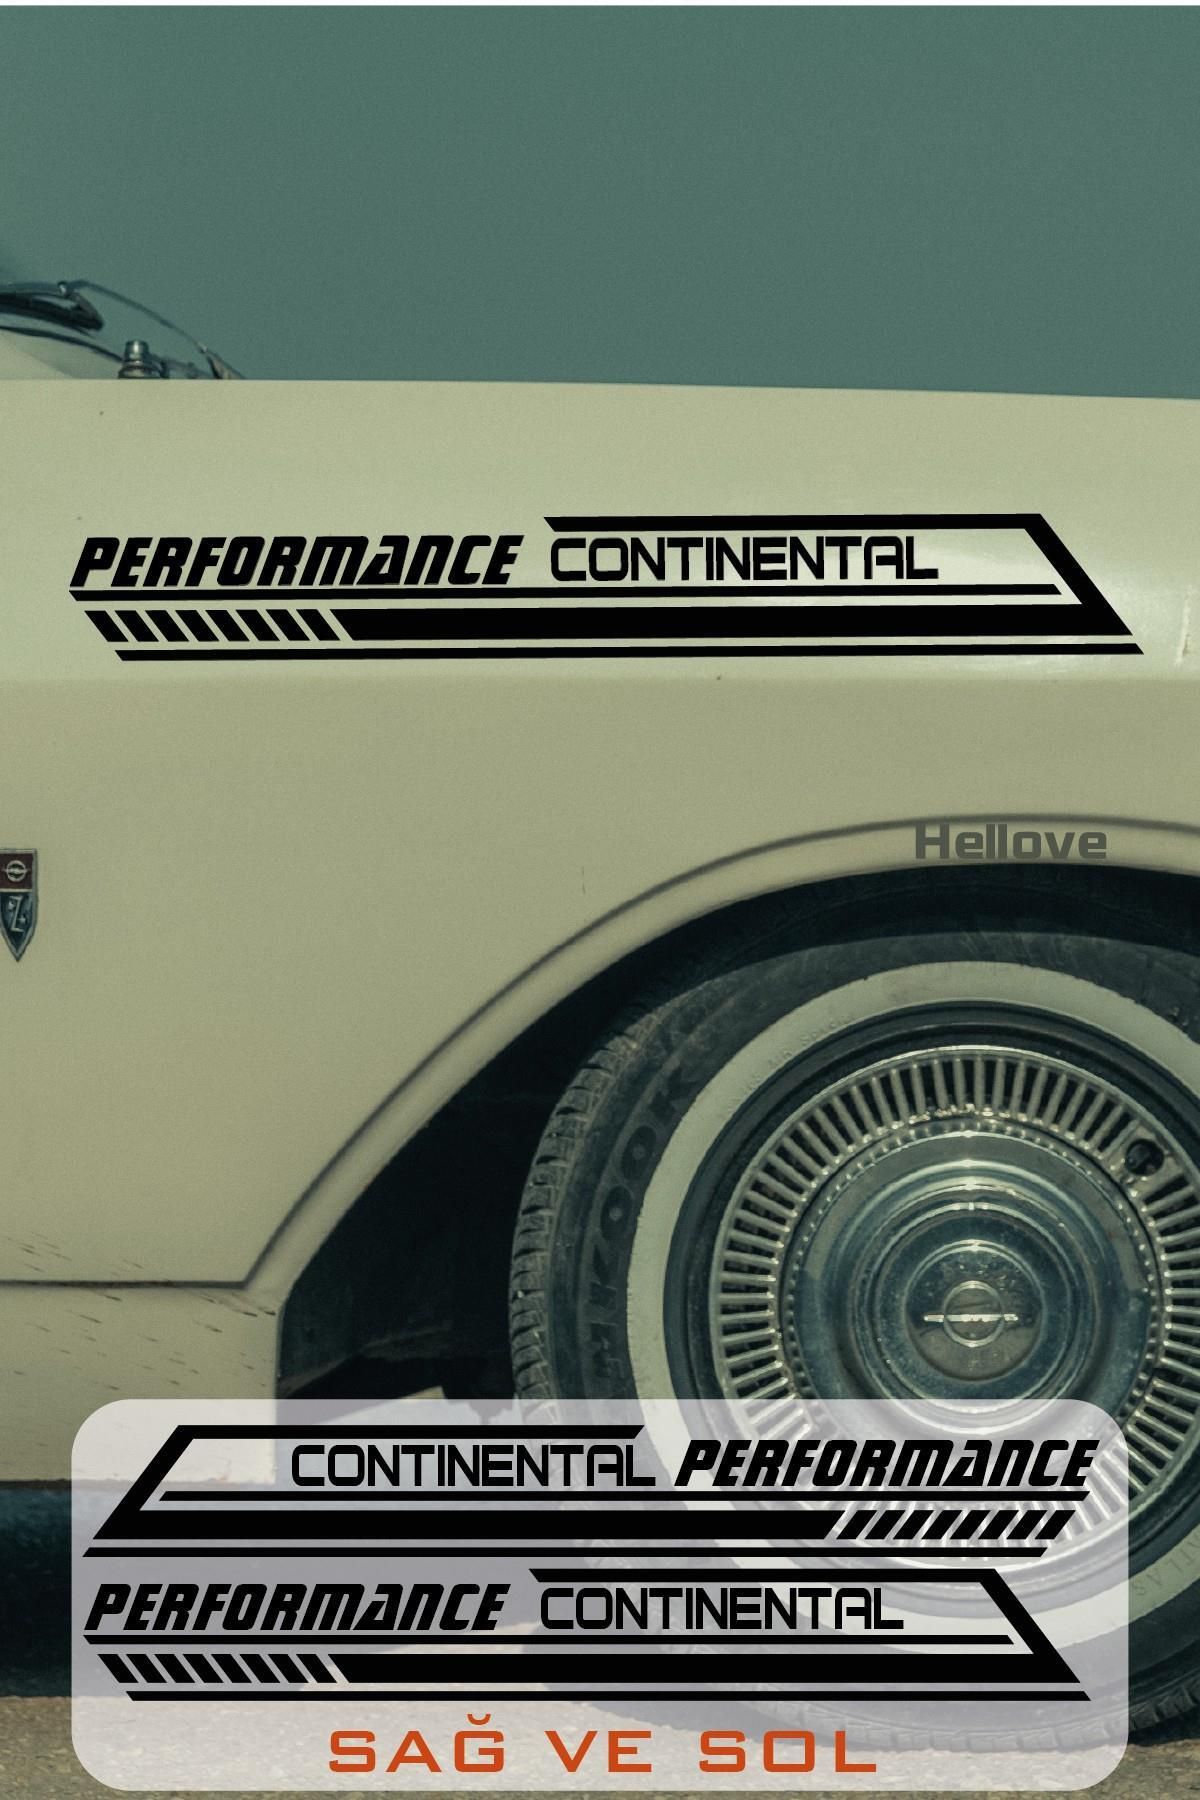 Hellove Bentley Continental Yan Şerit Performance Oto Araba Sticker Sağ ve Sol Siyah 55*16 Cm